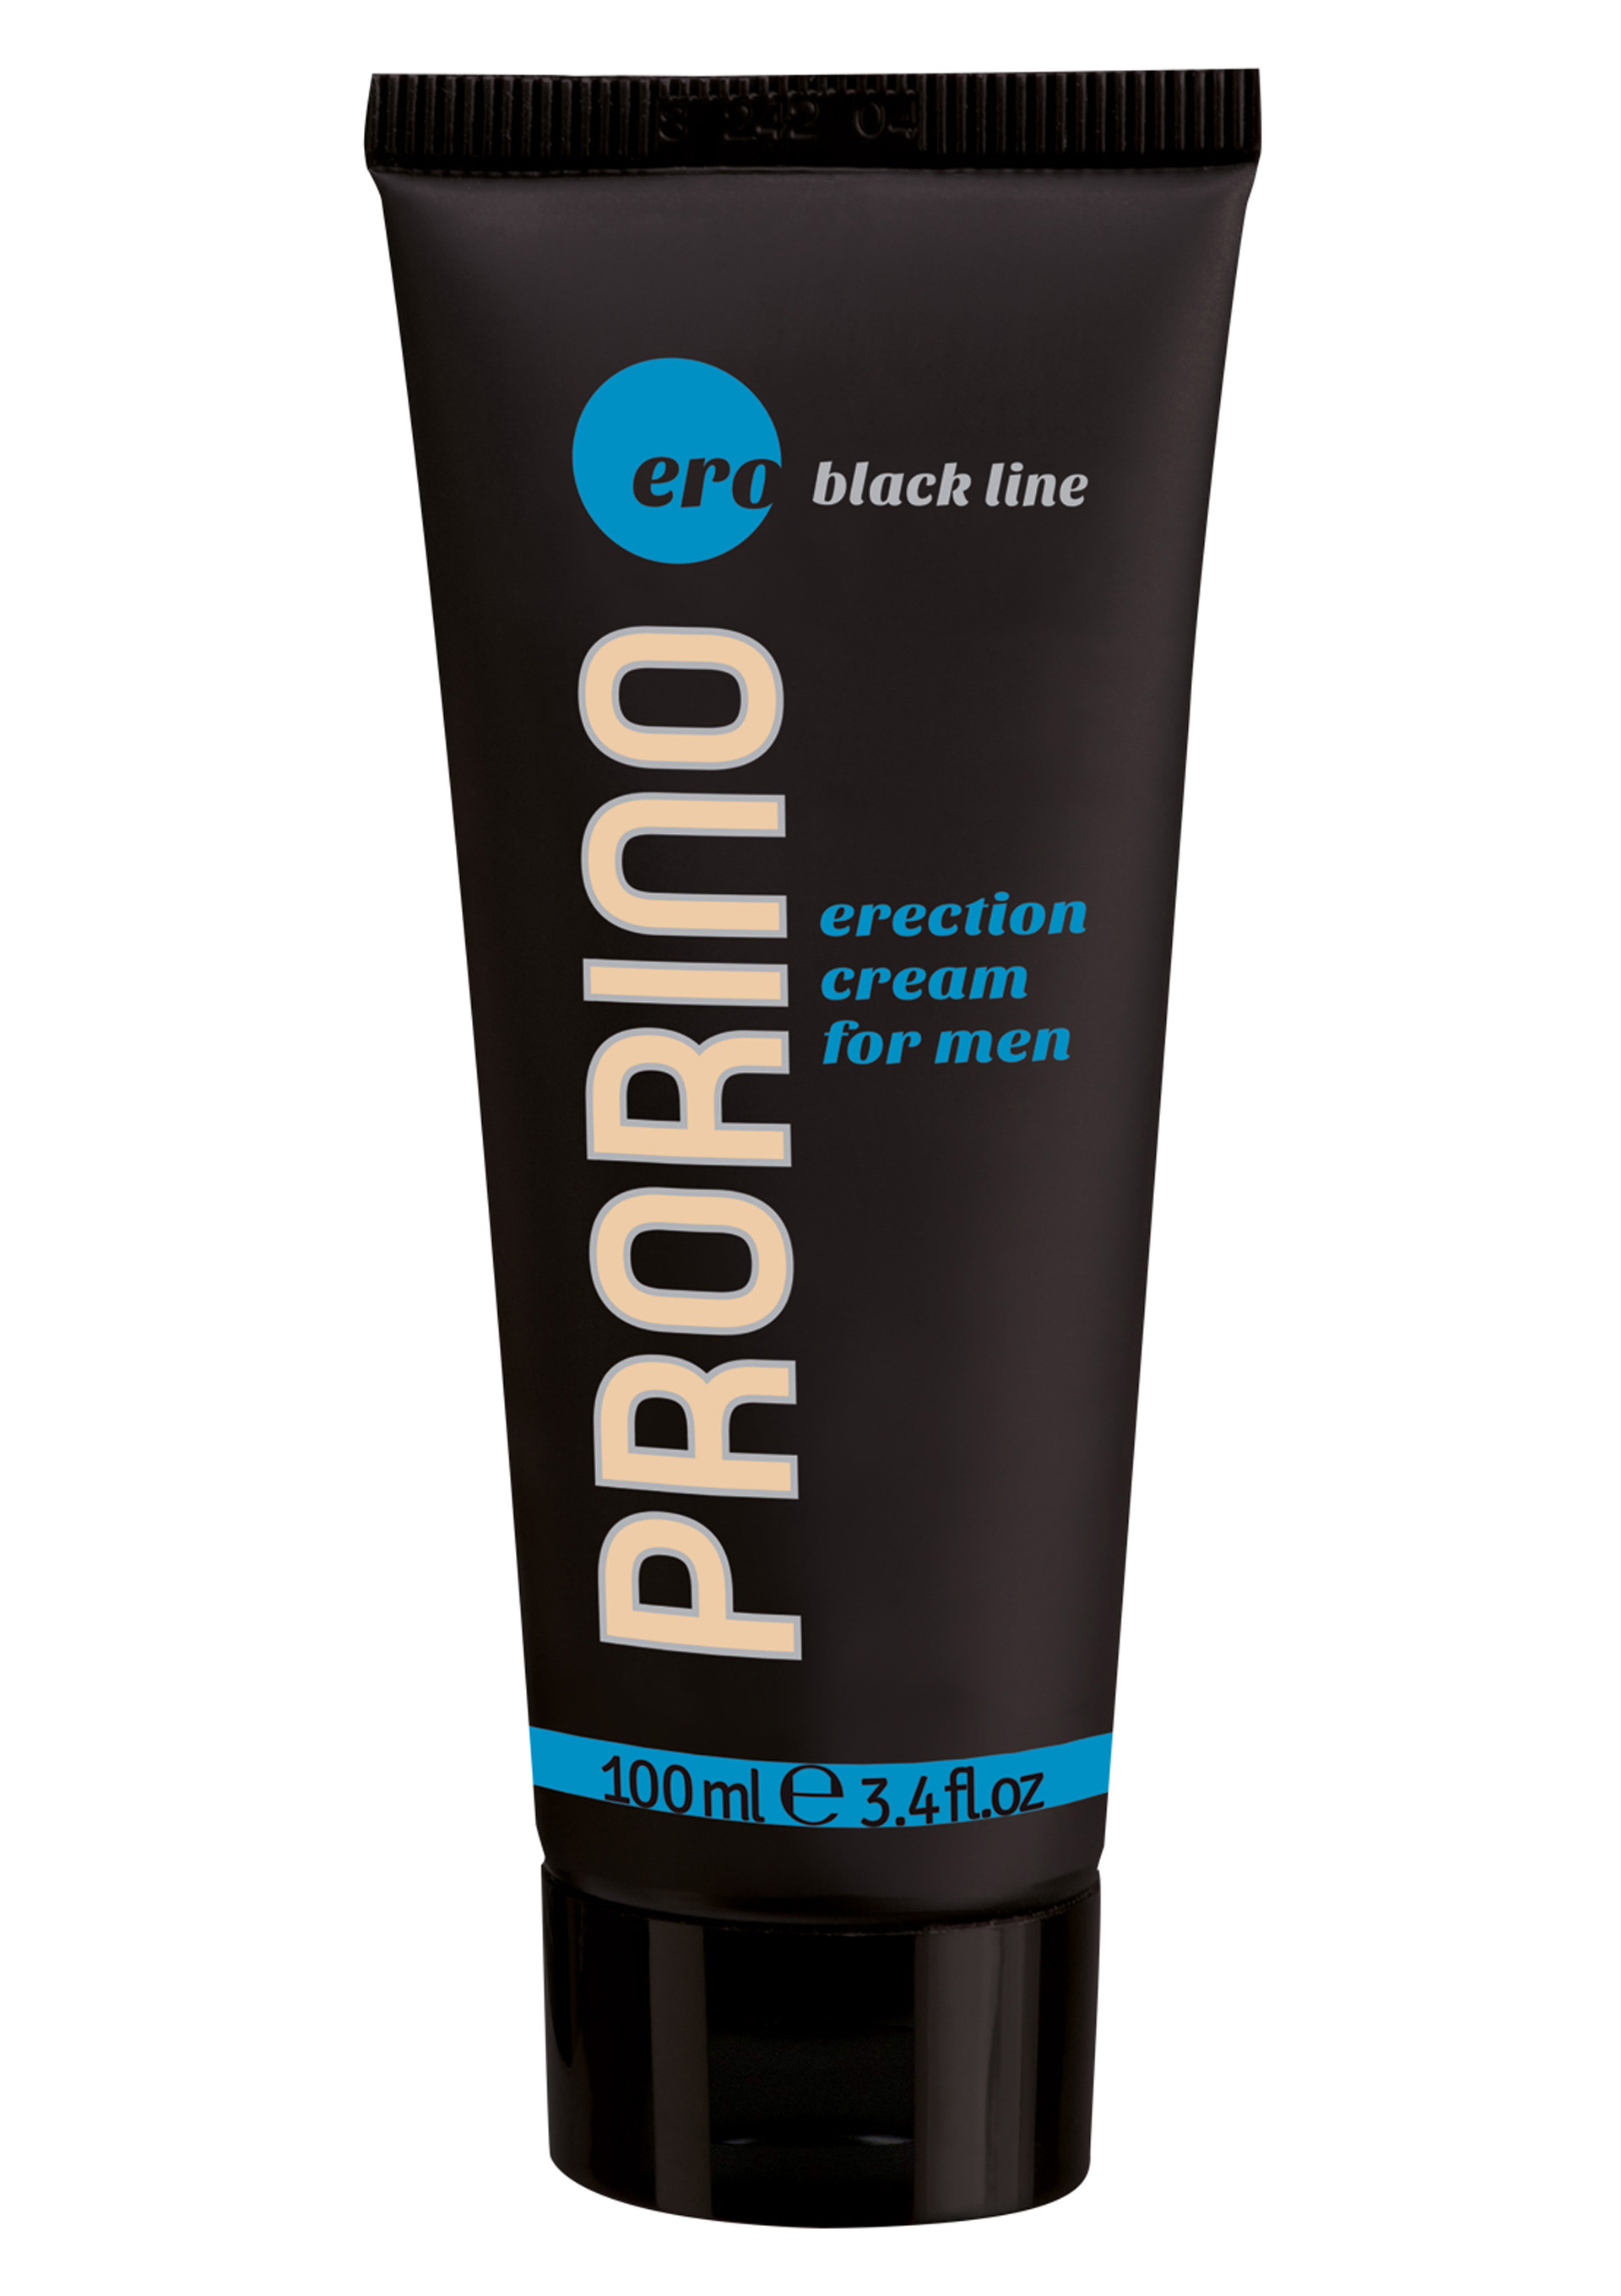 ERO black line Prorino erection cream for men 100ml.